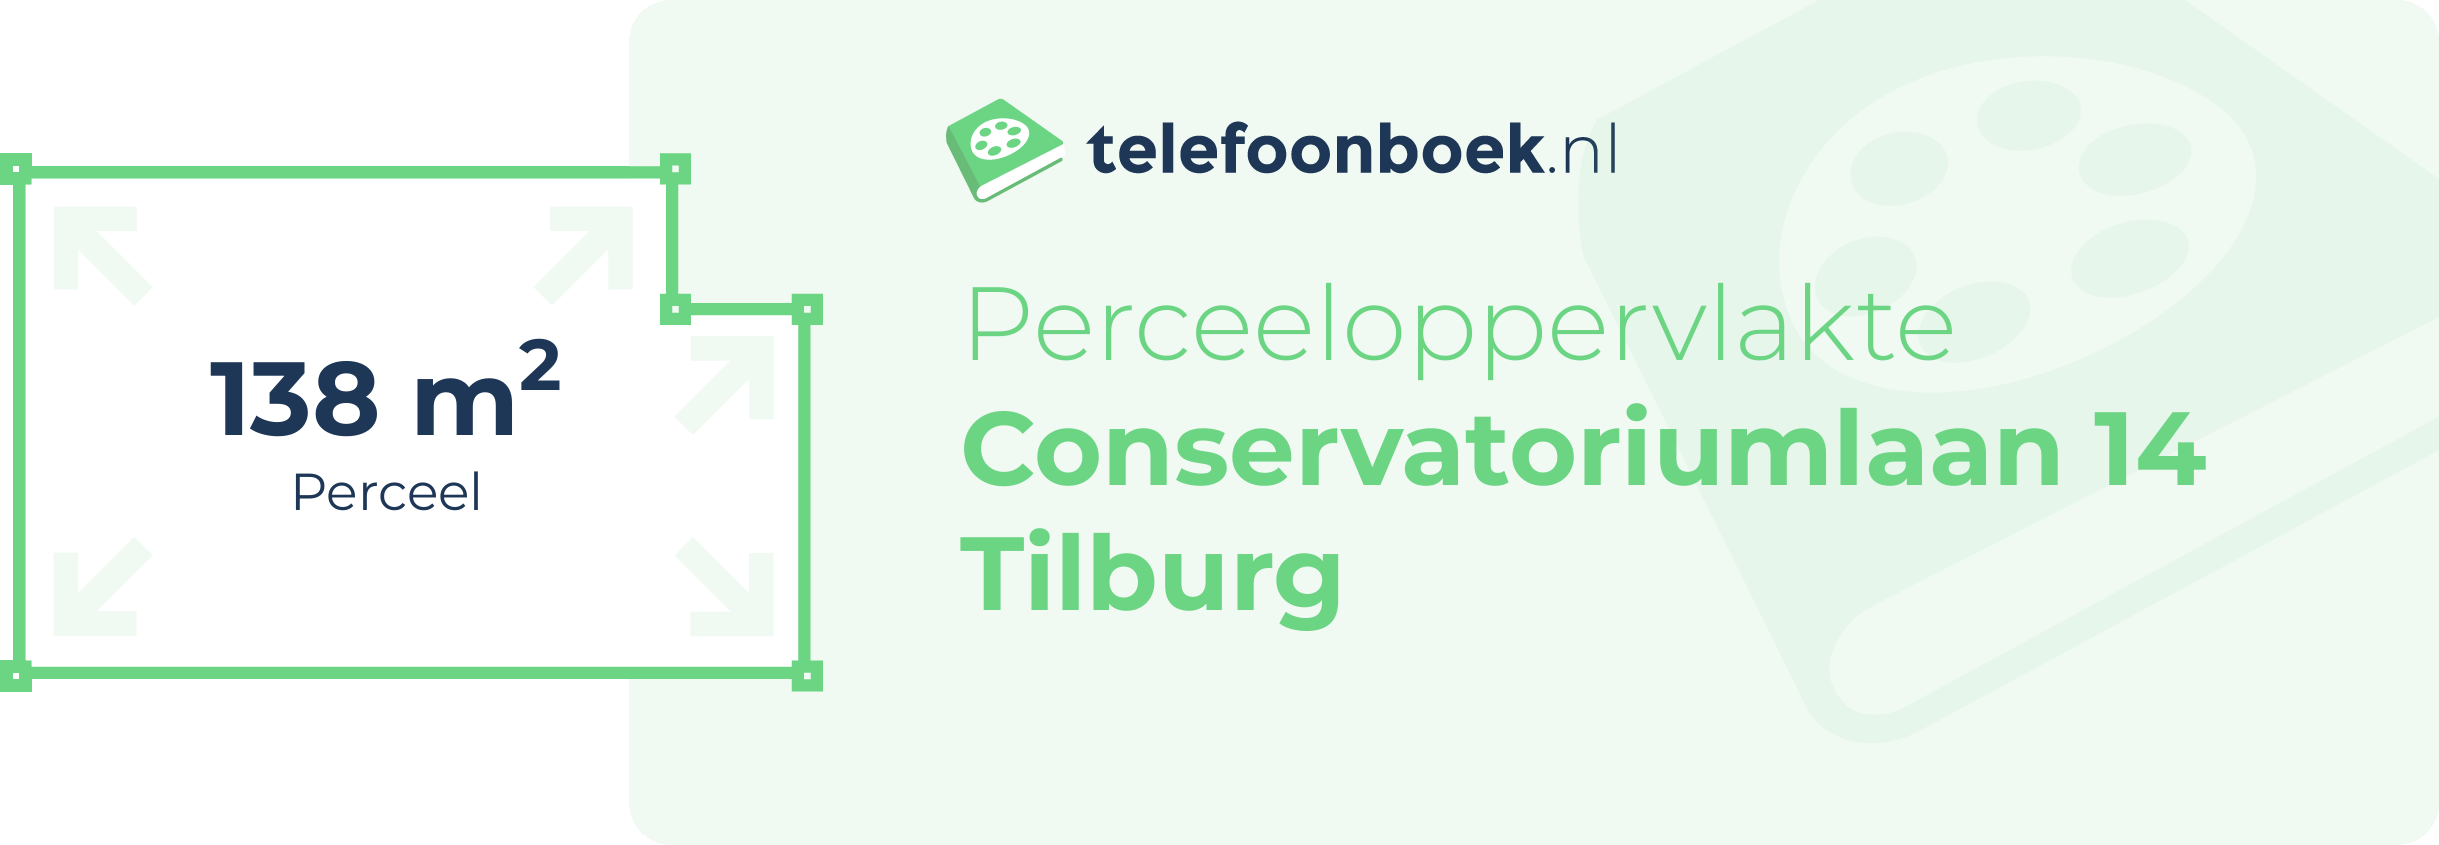 Perceeloppervlakte Conservatoriumlaan 14 Tilburg